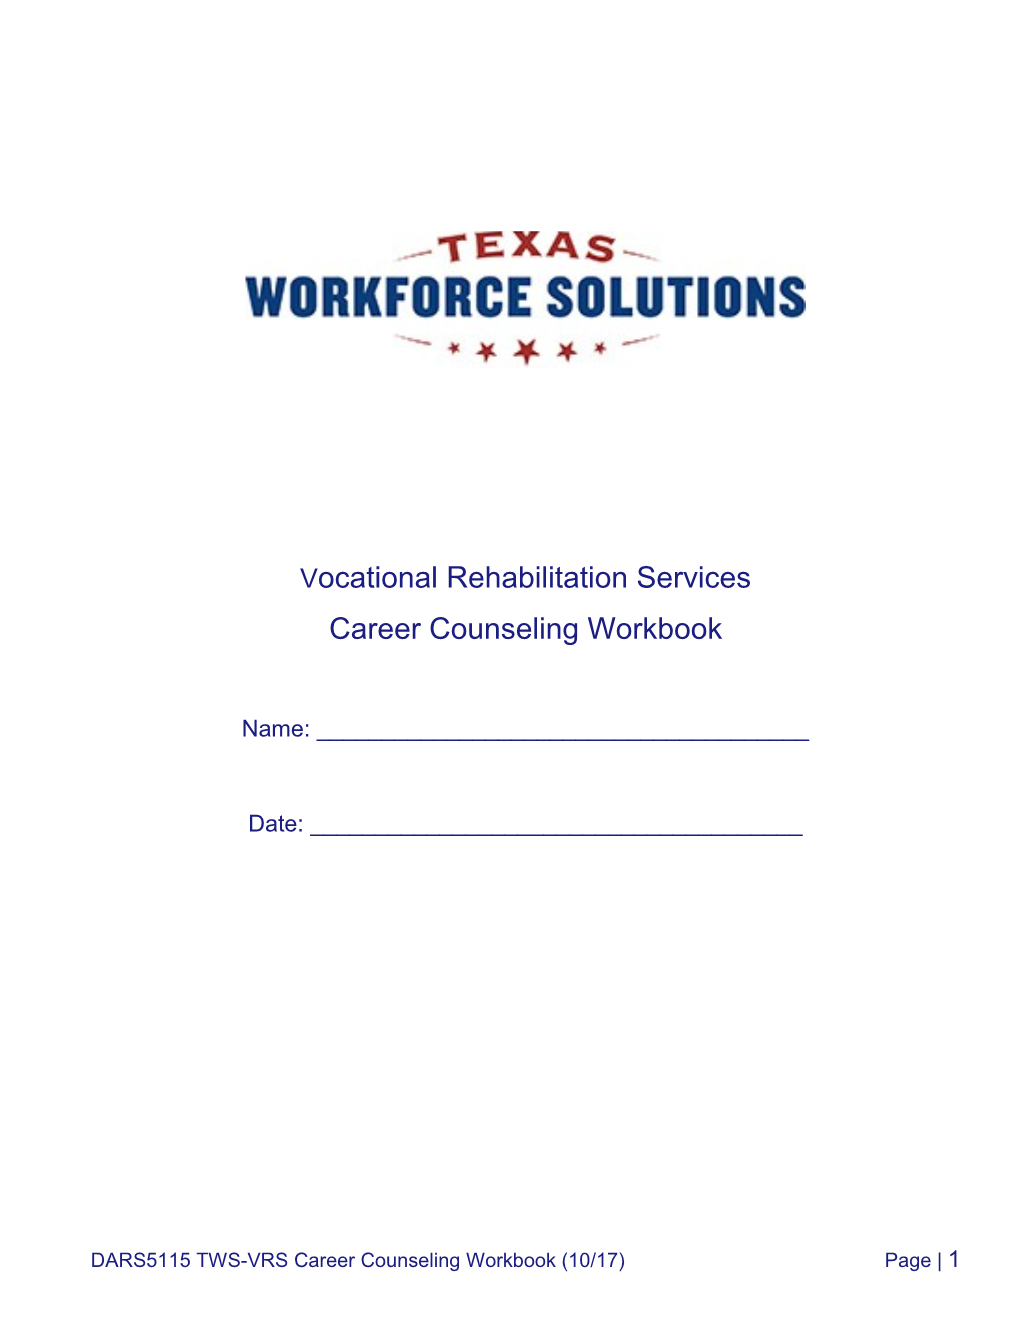 DARS5115 TWS VRS Career Counseling Workbook